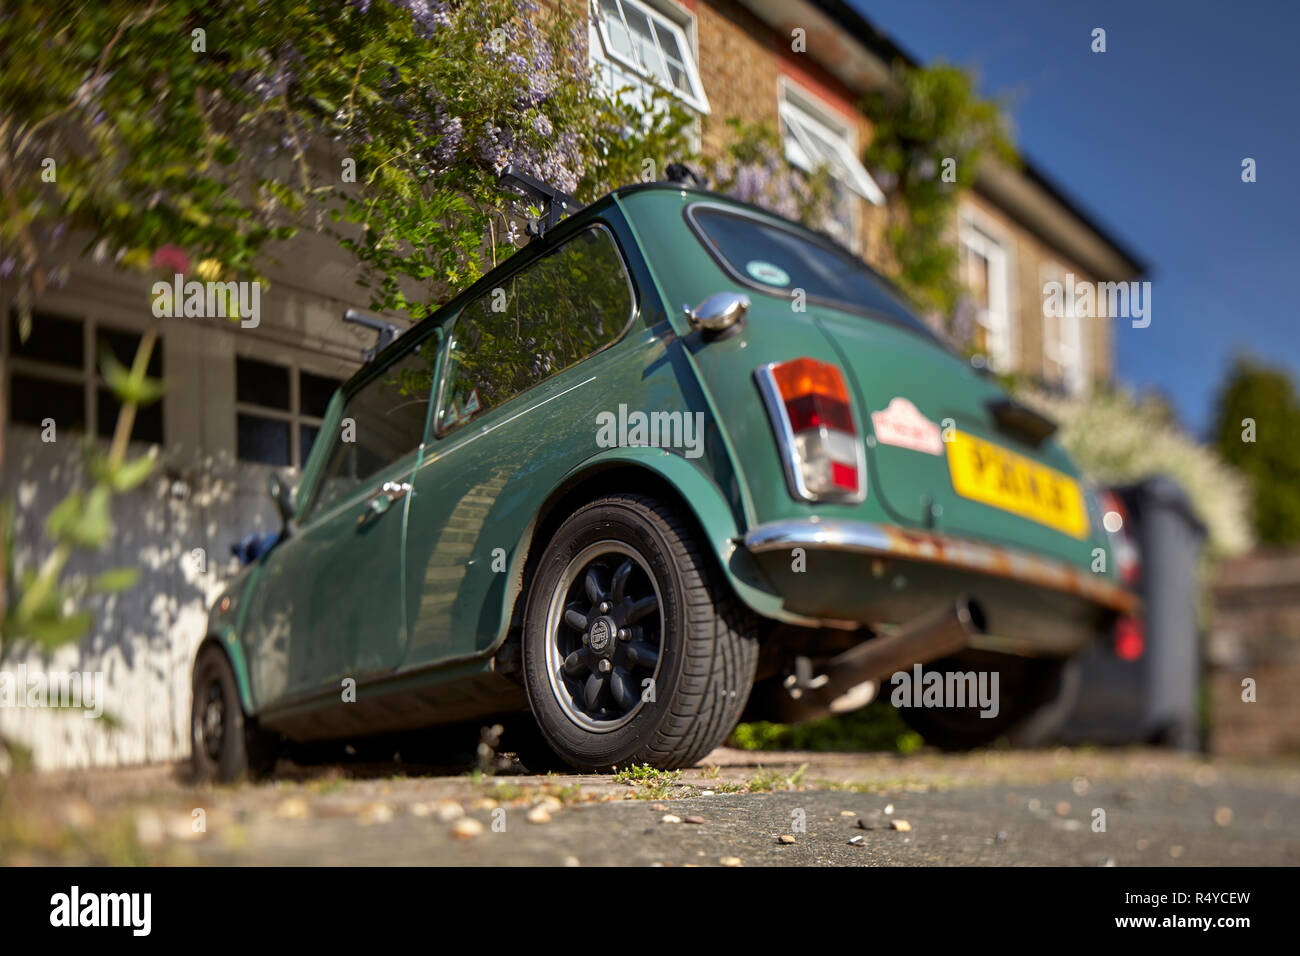 British Racing green Mini Cooper Stock Photo